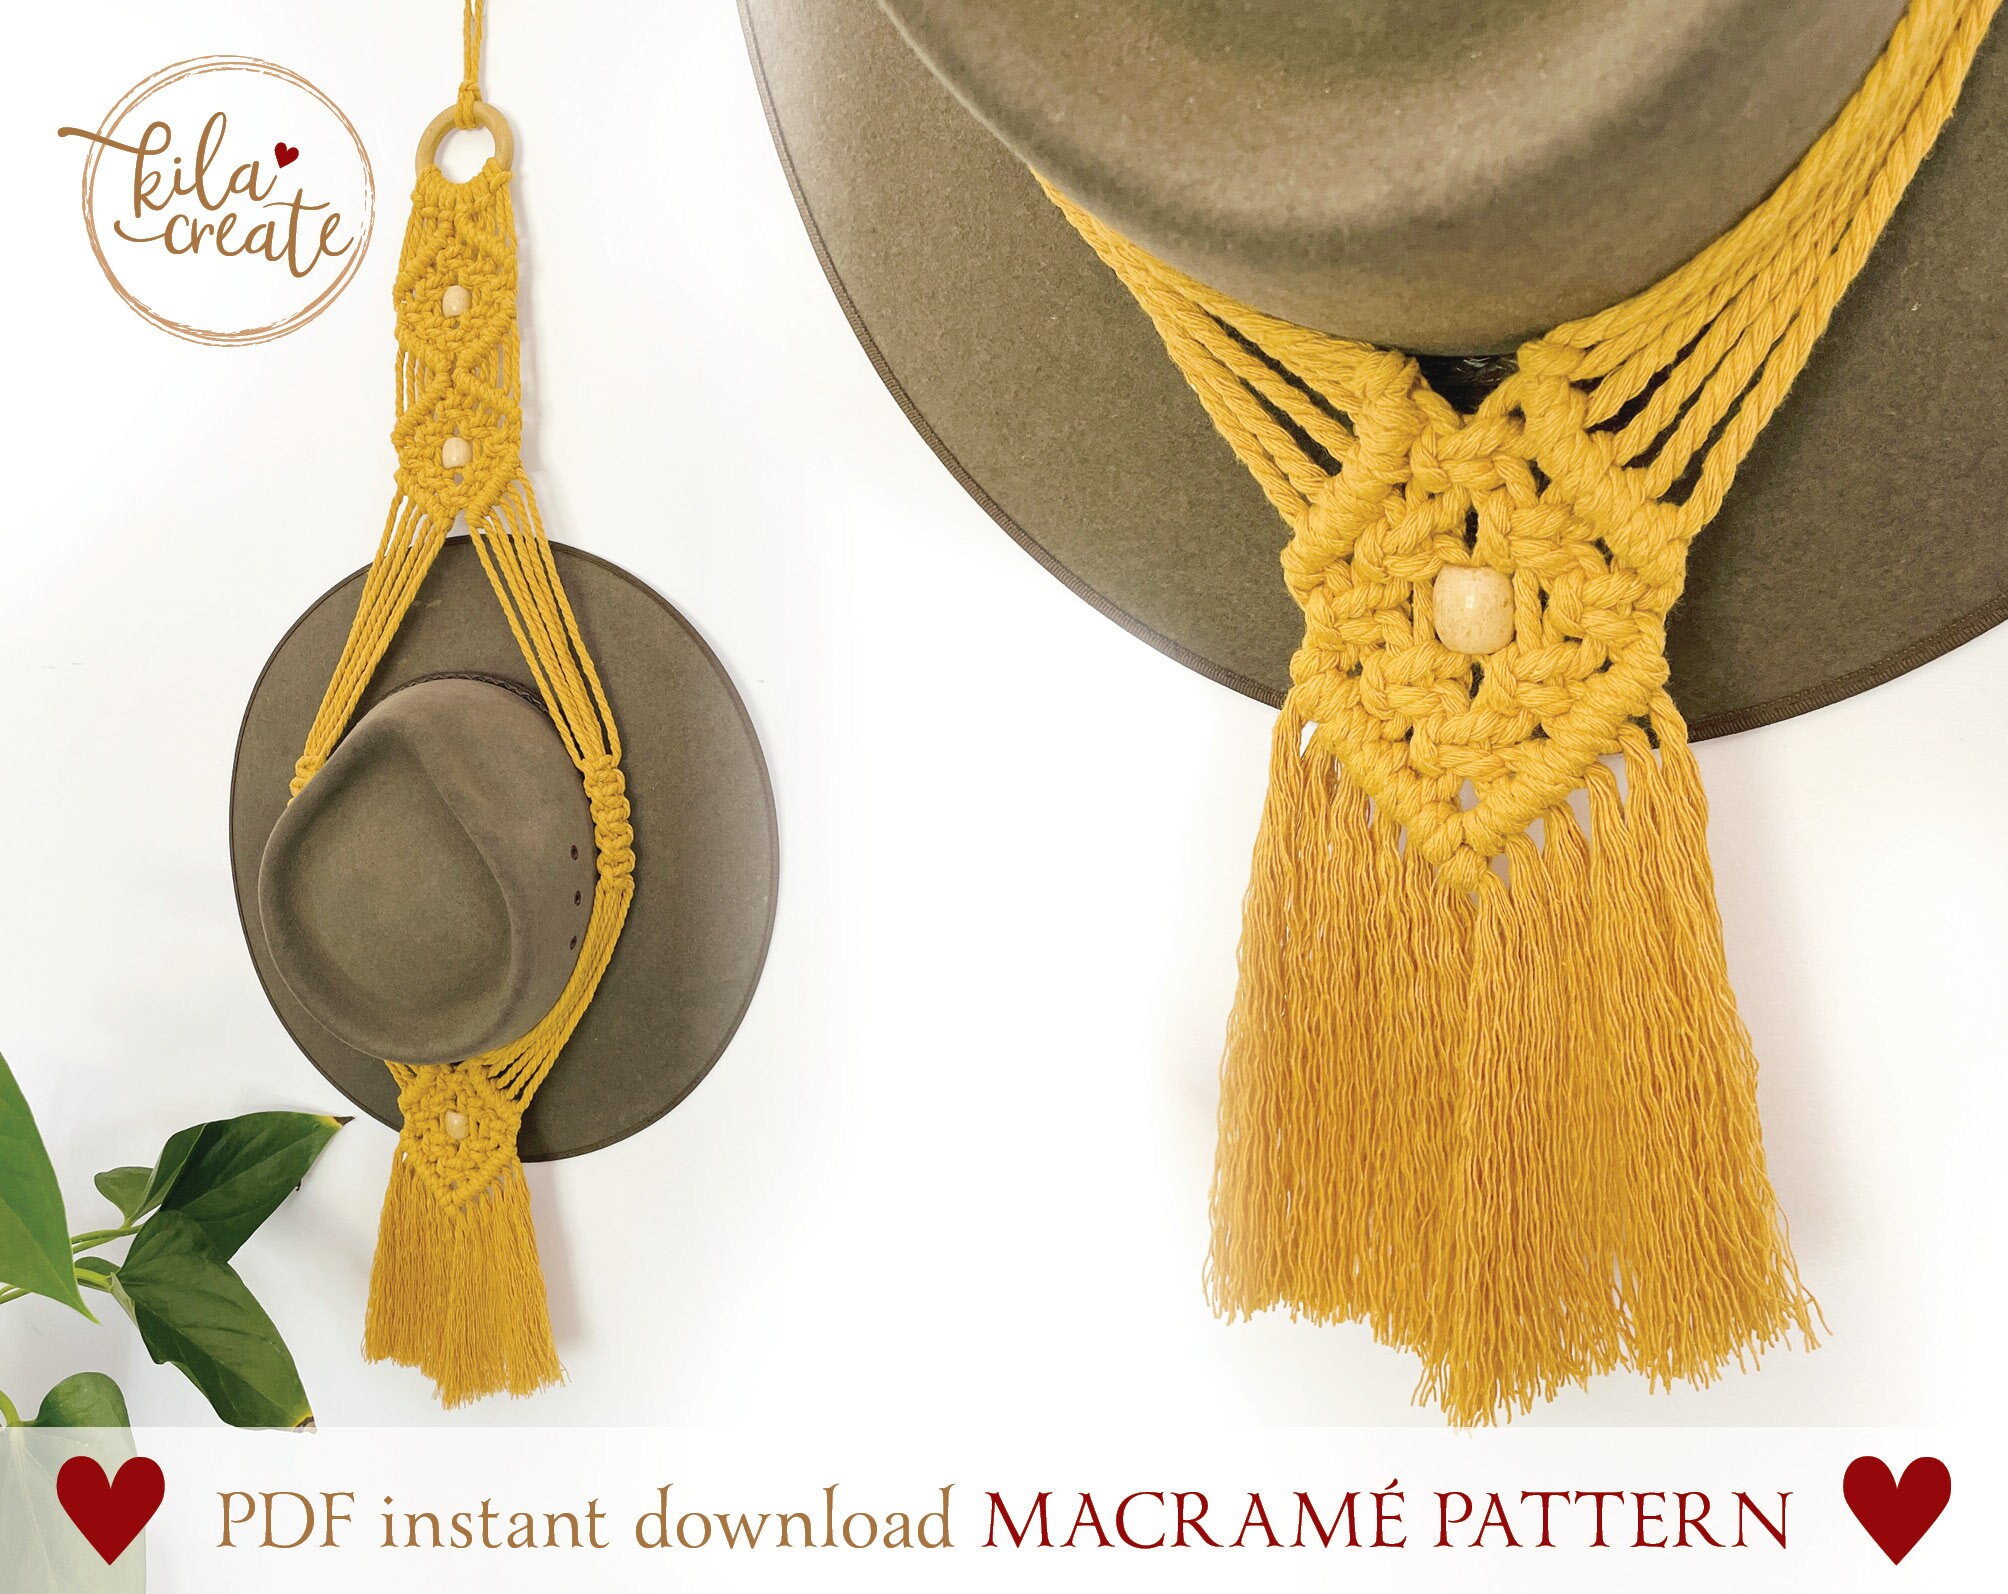 Easy DIY Macrame Hat Hanger Tutorial for Beginners (PDF) - Happy Knotting  Macrame Patterns